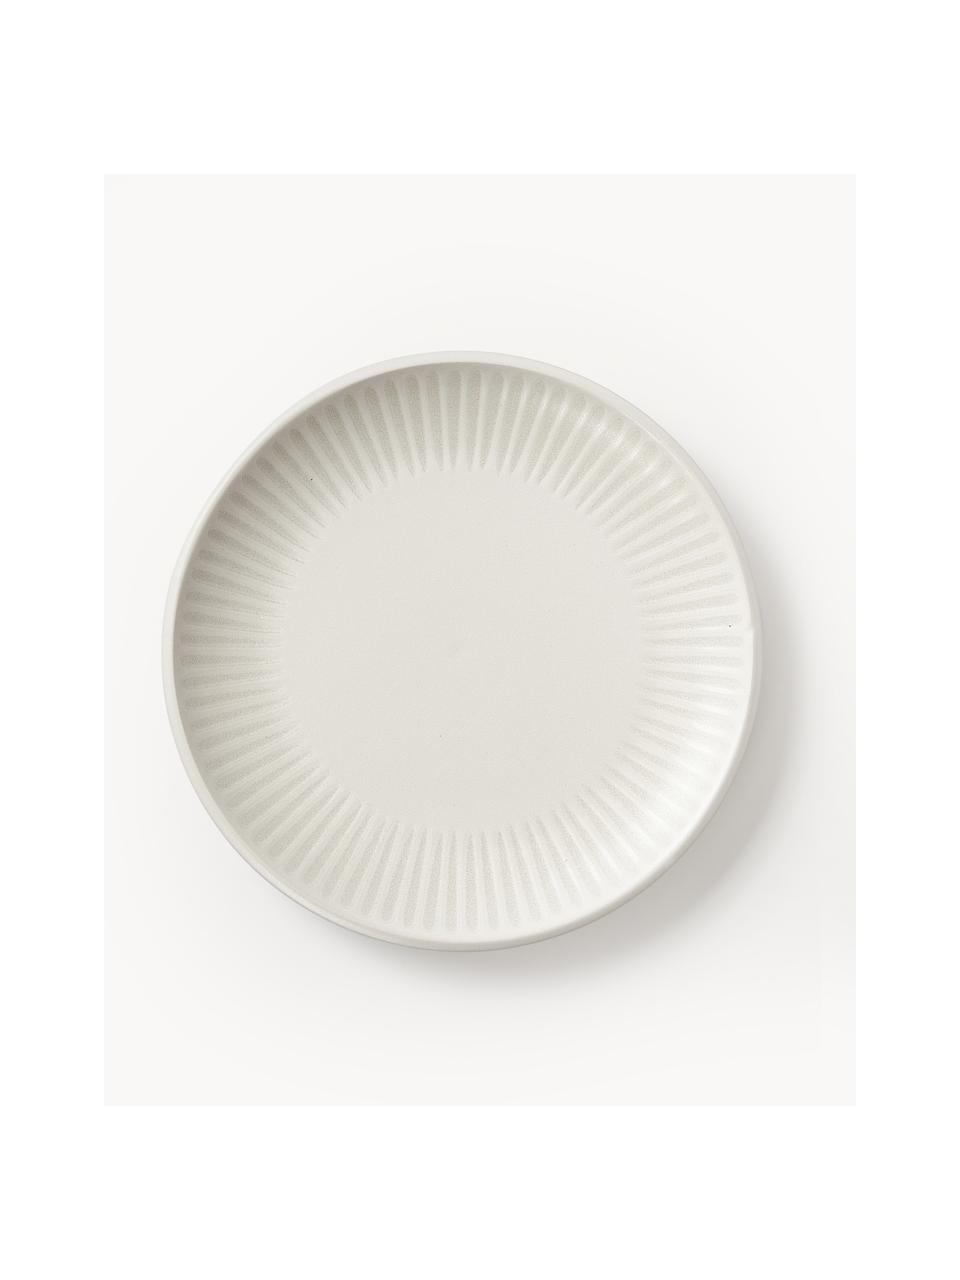 Ontbijtbord Zabelle met streepversiering, 4 stuks, Keramiek, Gebroken wit, lichtbeige, Ø 23 x H 3 cm